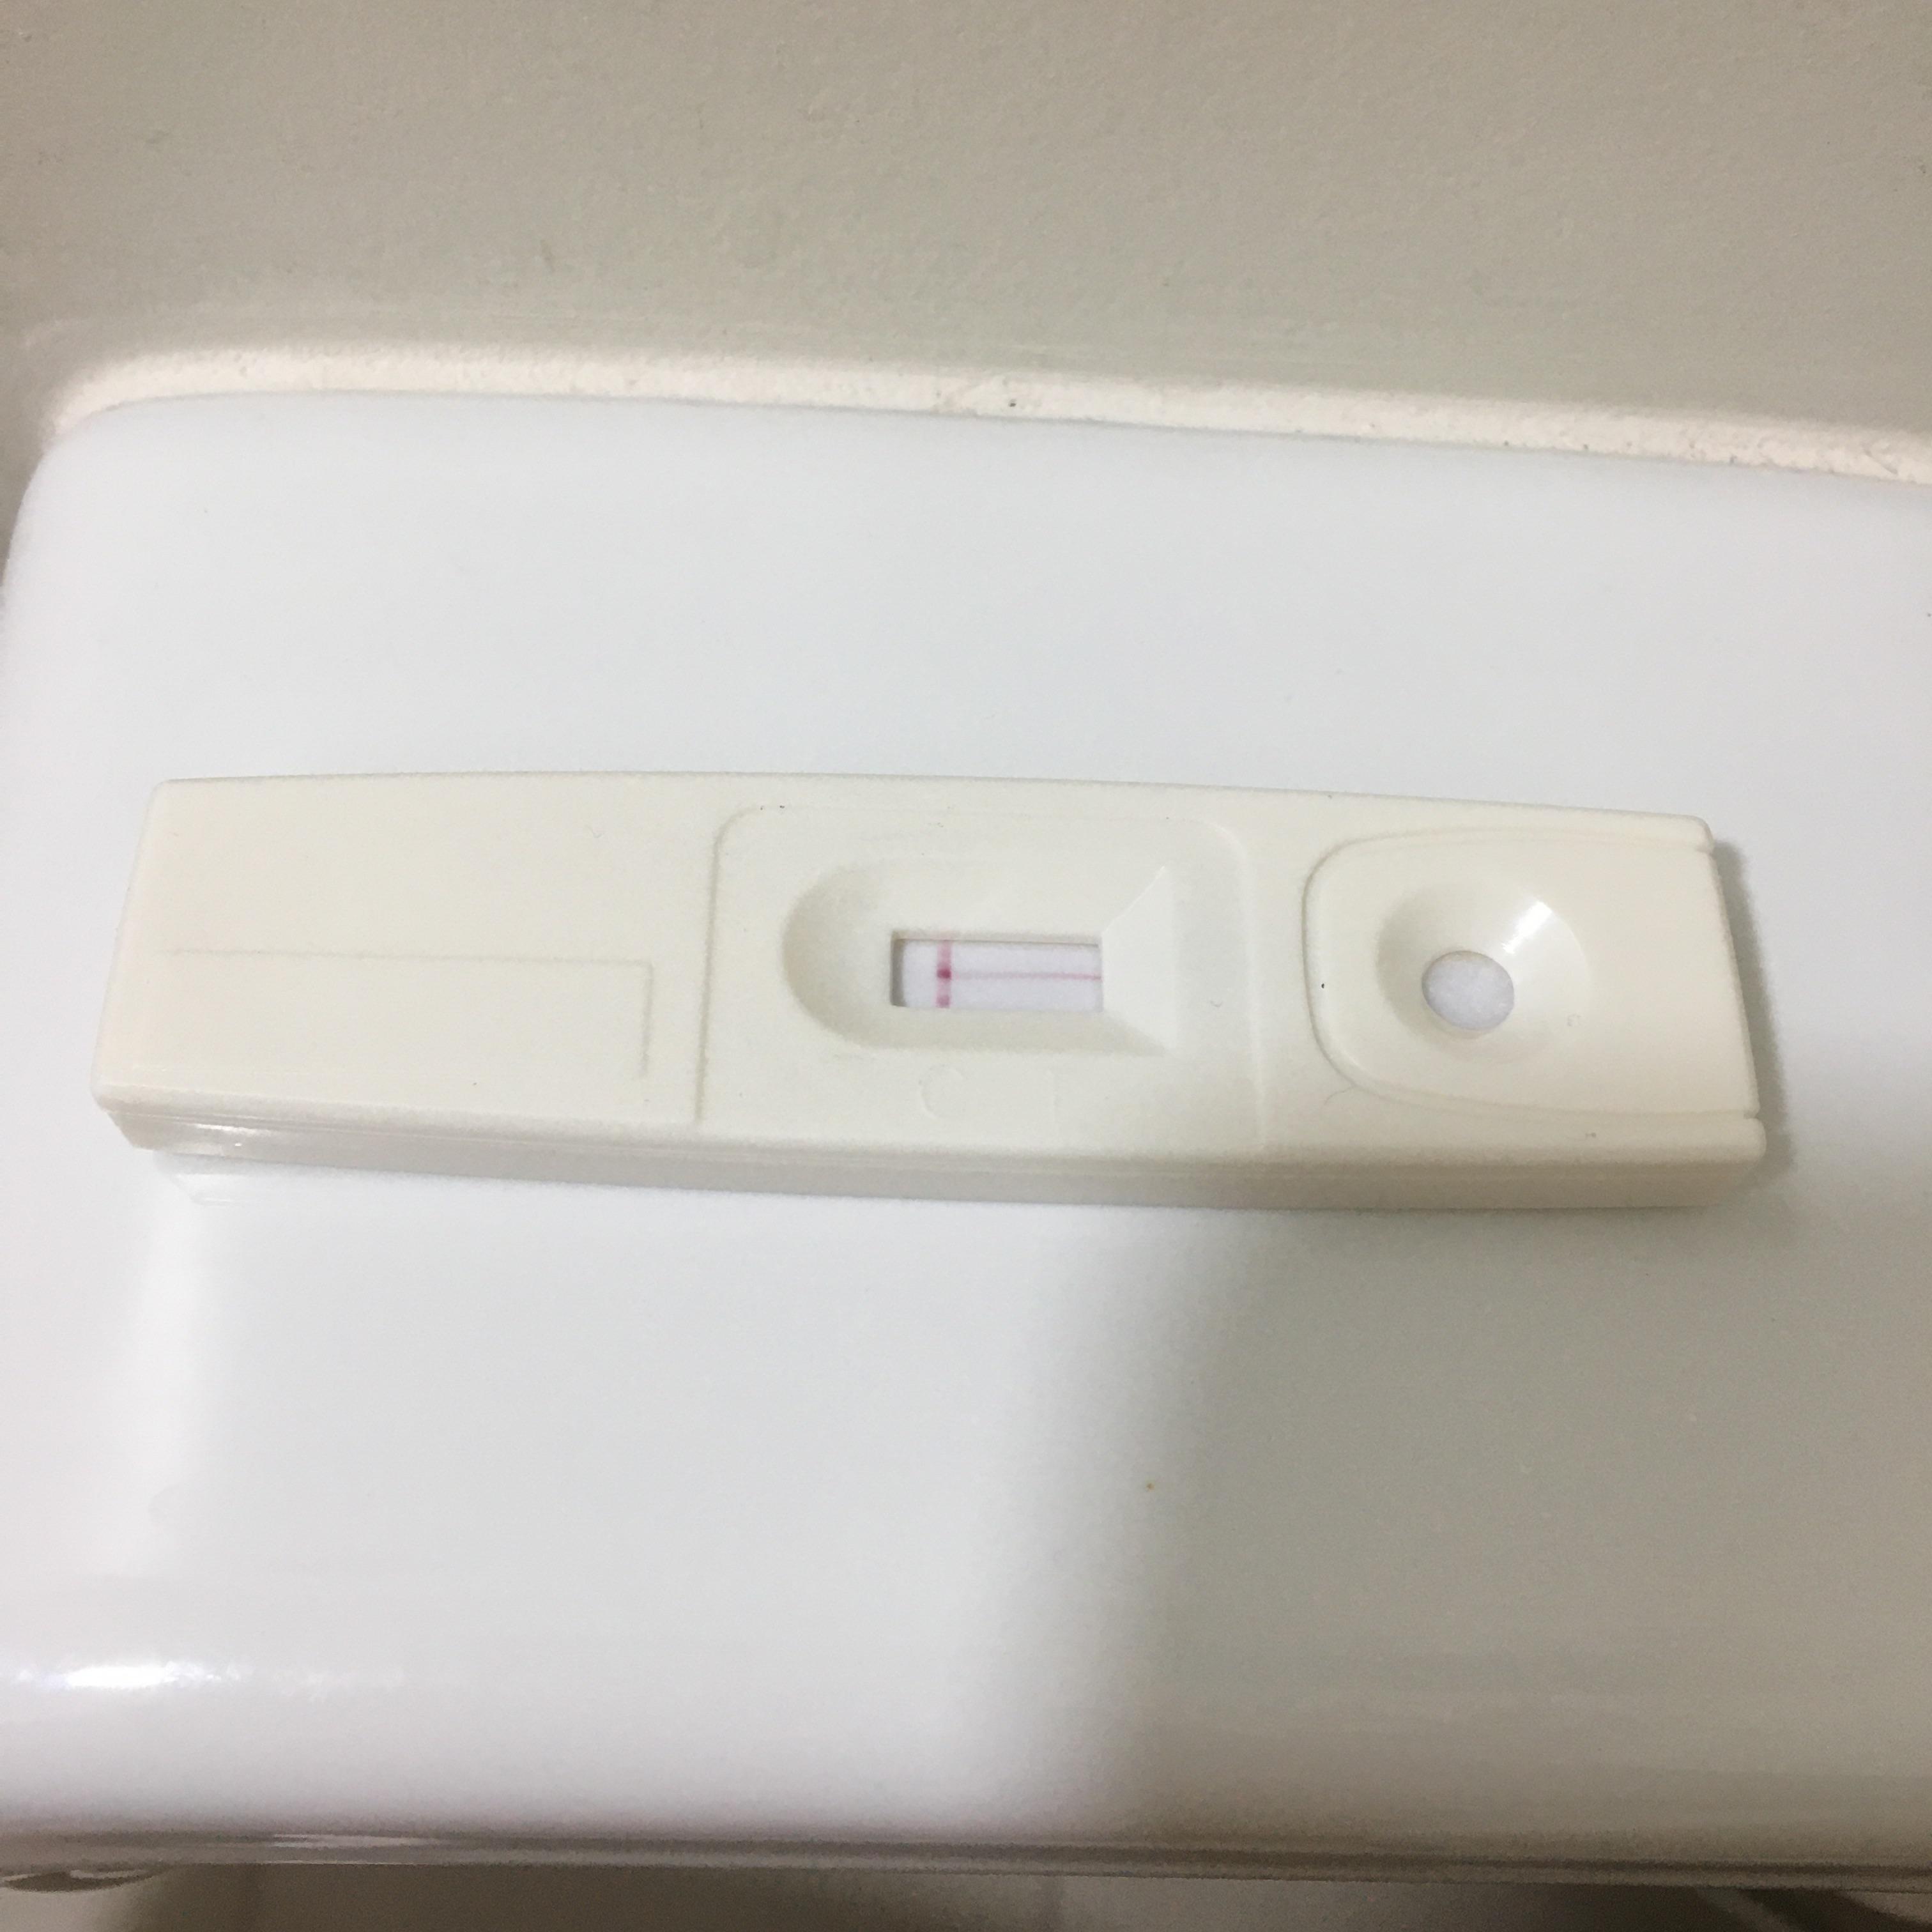 vant Furnace lungebetændelse streak of color / dye run on pregnancy test. is this already considered  invalid? | Scrolller